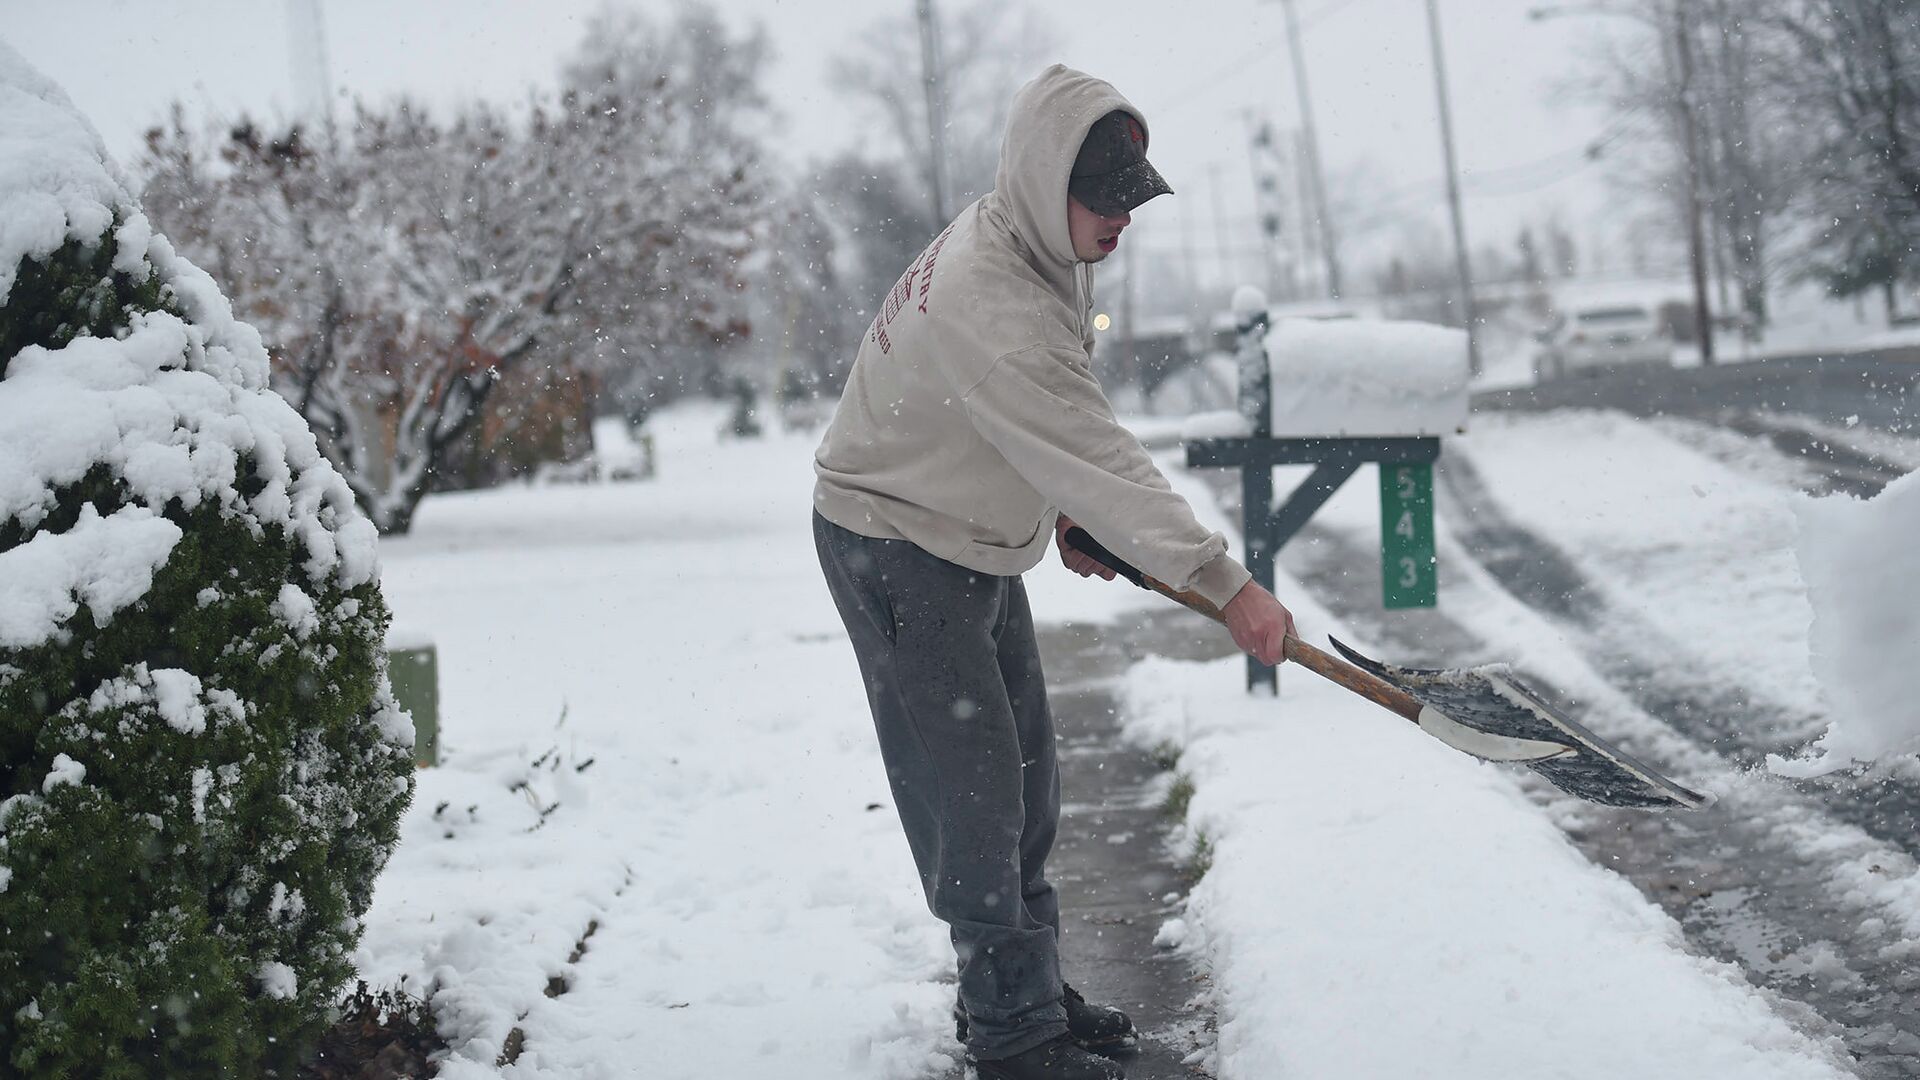 Мужчина очищает дорожку от снега в штате Пенсильвания, США. Архивное фото - РИА Новости, 1920, 04.03.2021